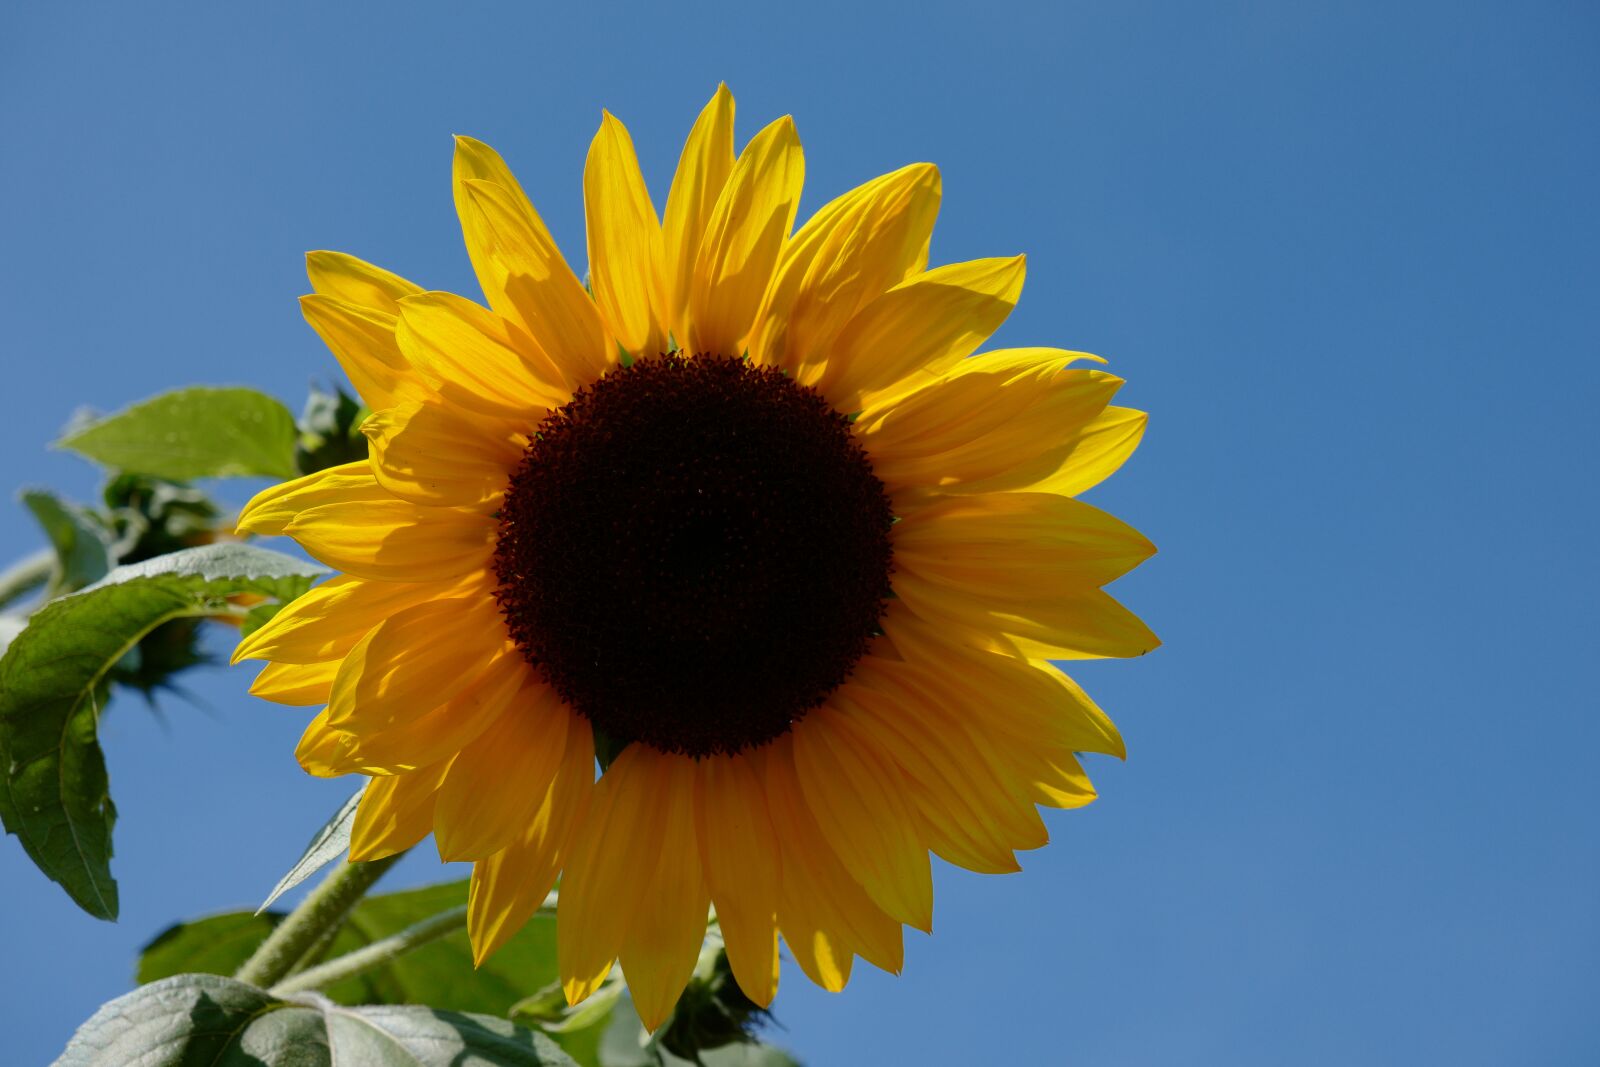 Vario-Elmar TL 1:3.5-5.6 / 18-56 ASPH. sample photo. Sunflower, yellow, summer photography